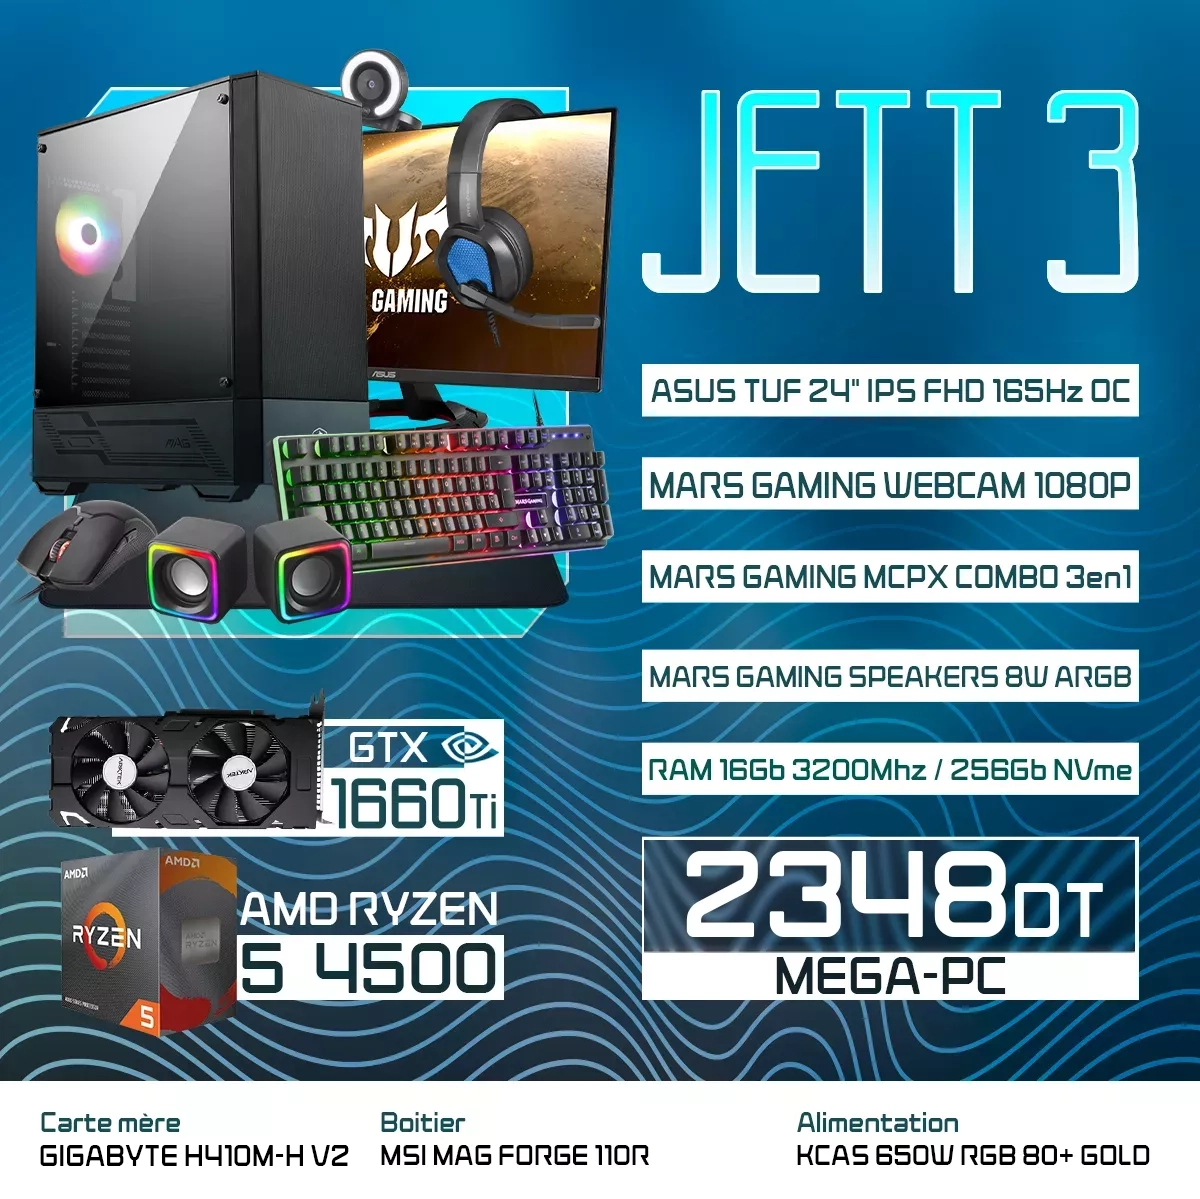 JETT 3 | RYZEN 5 4500 | GTX 1660 Ti | 16GB RAM | 256GB NVMe